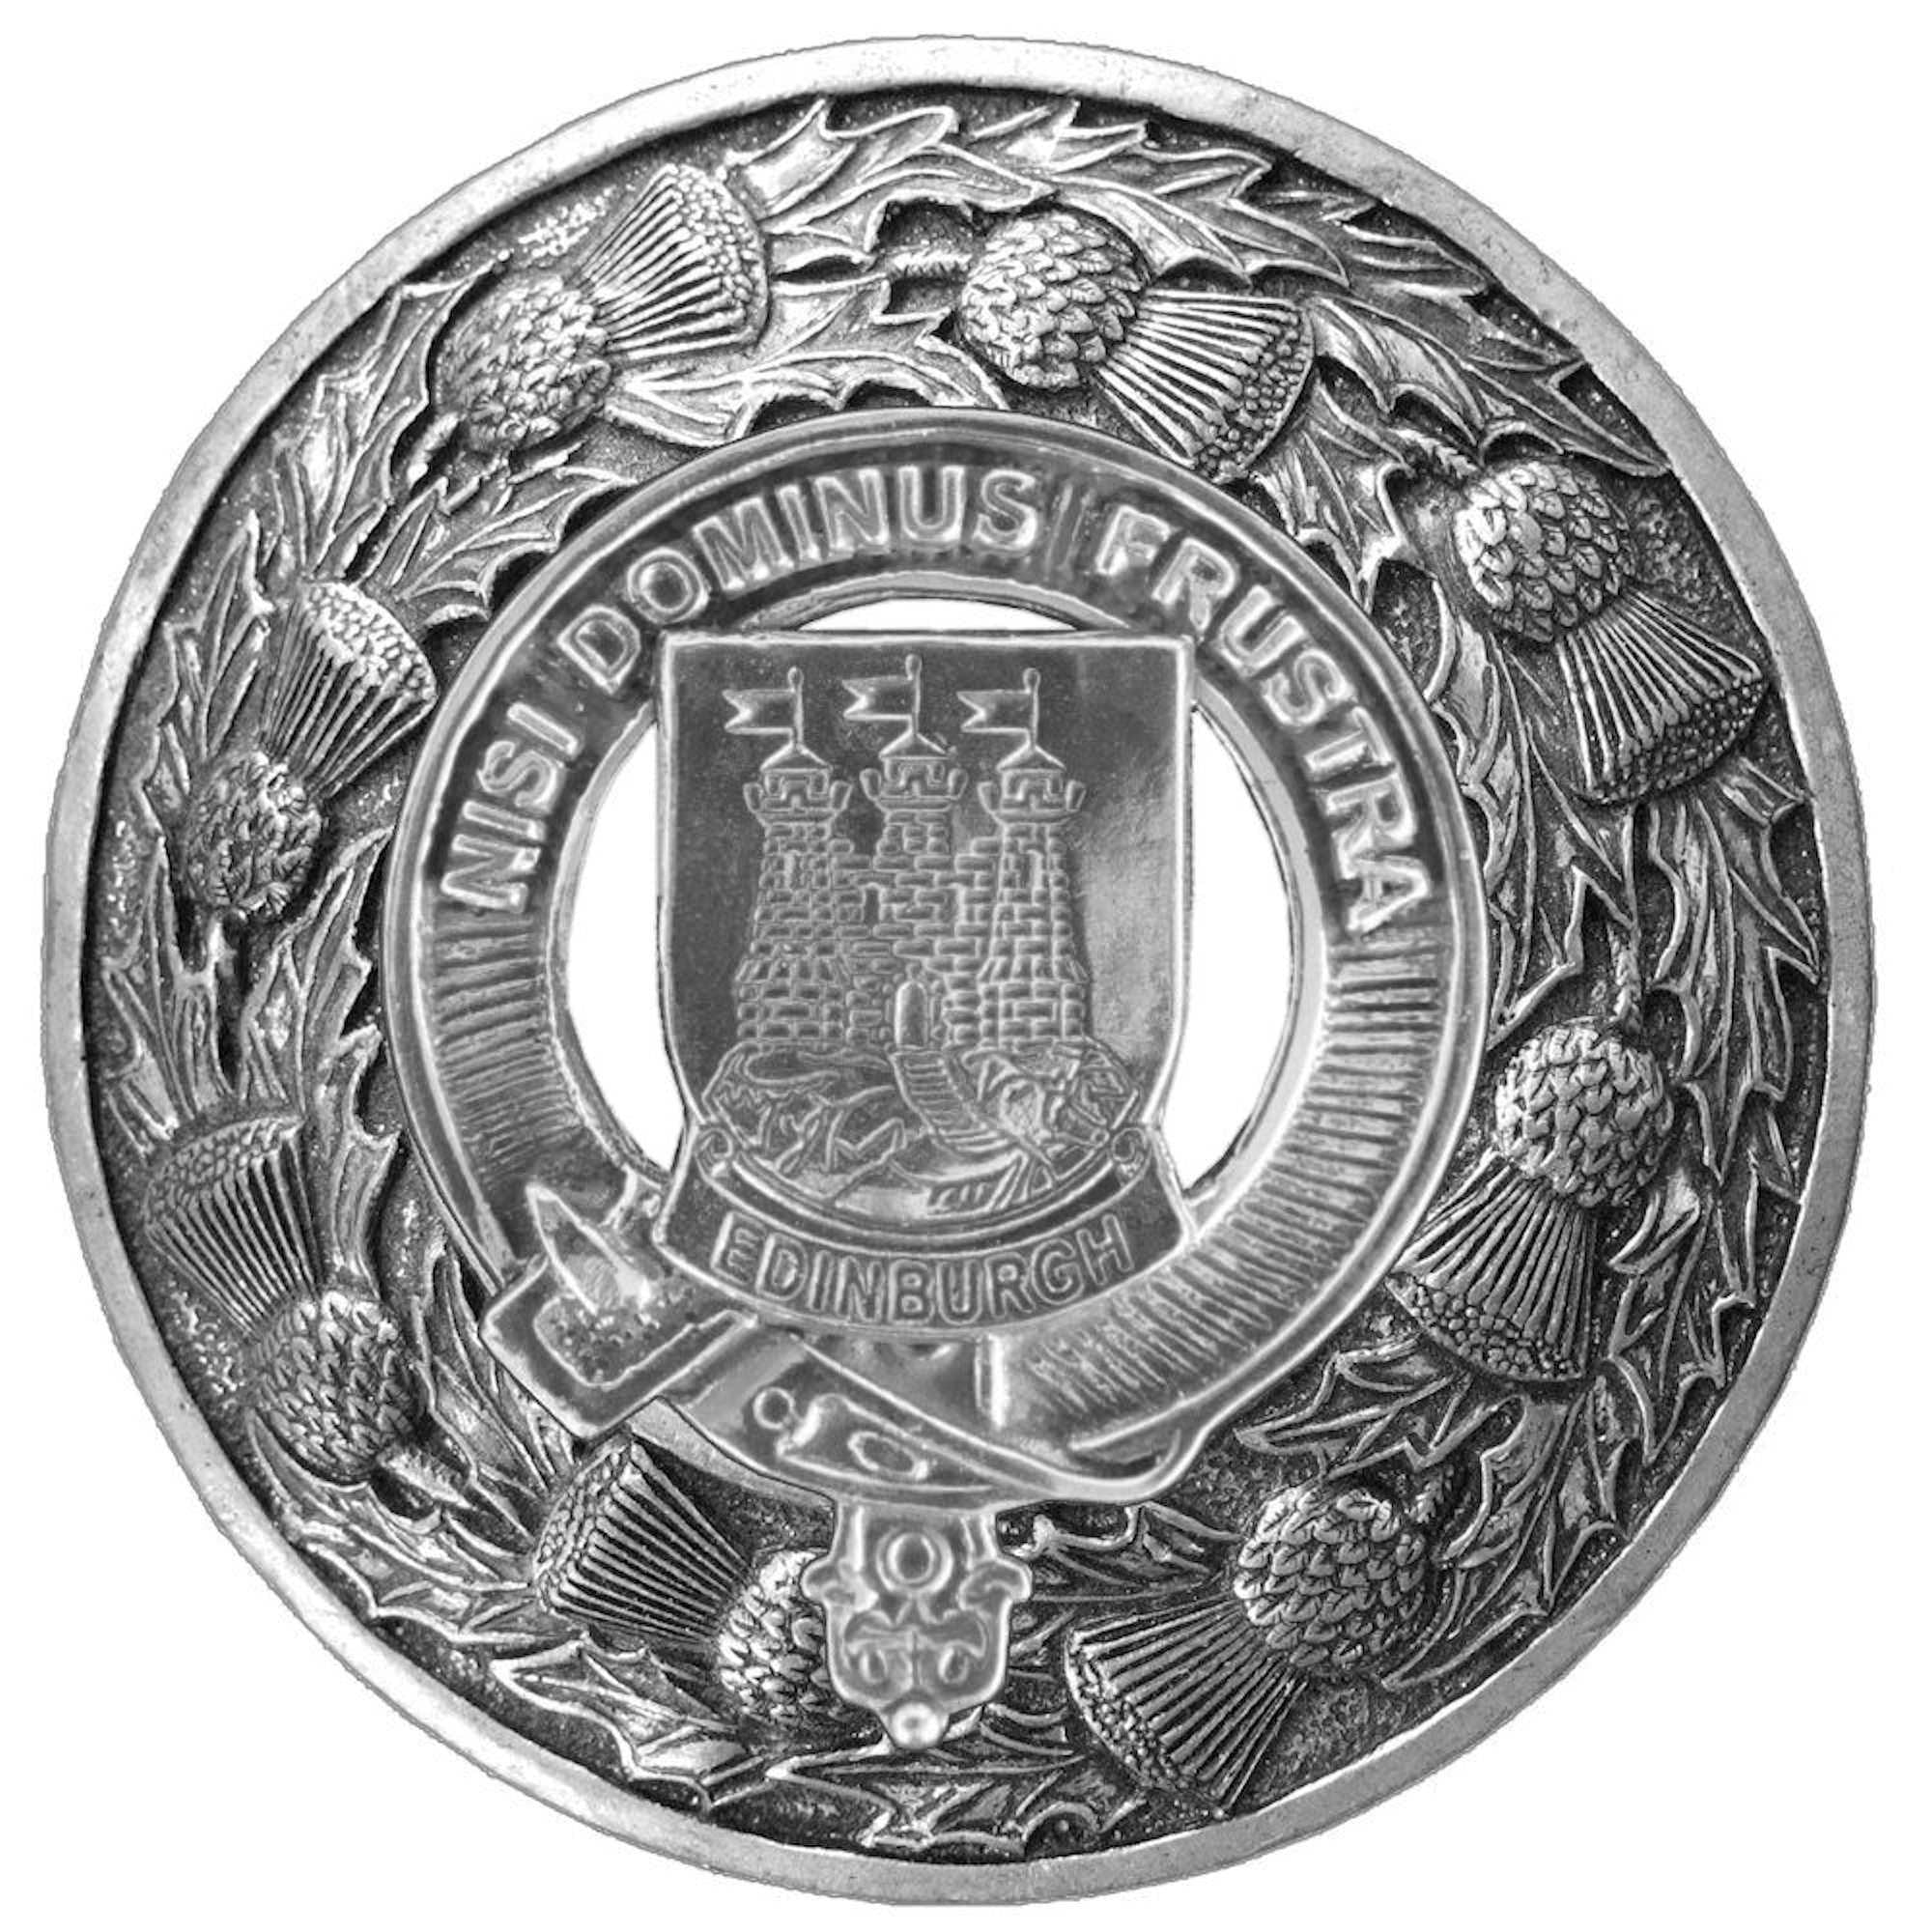 Scottish City of Edinburgh Crest Badge Plaid Brooch